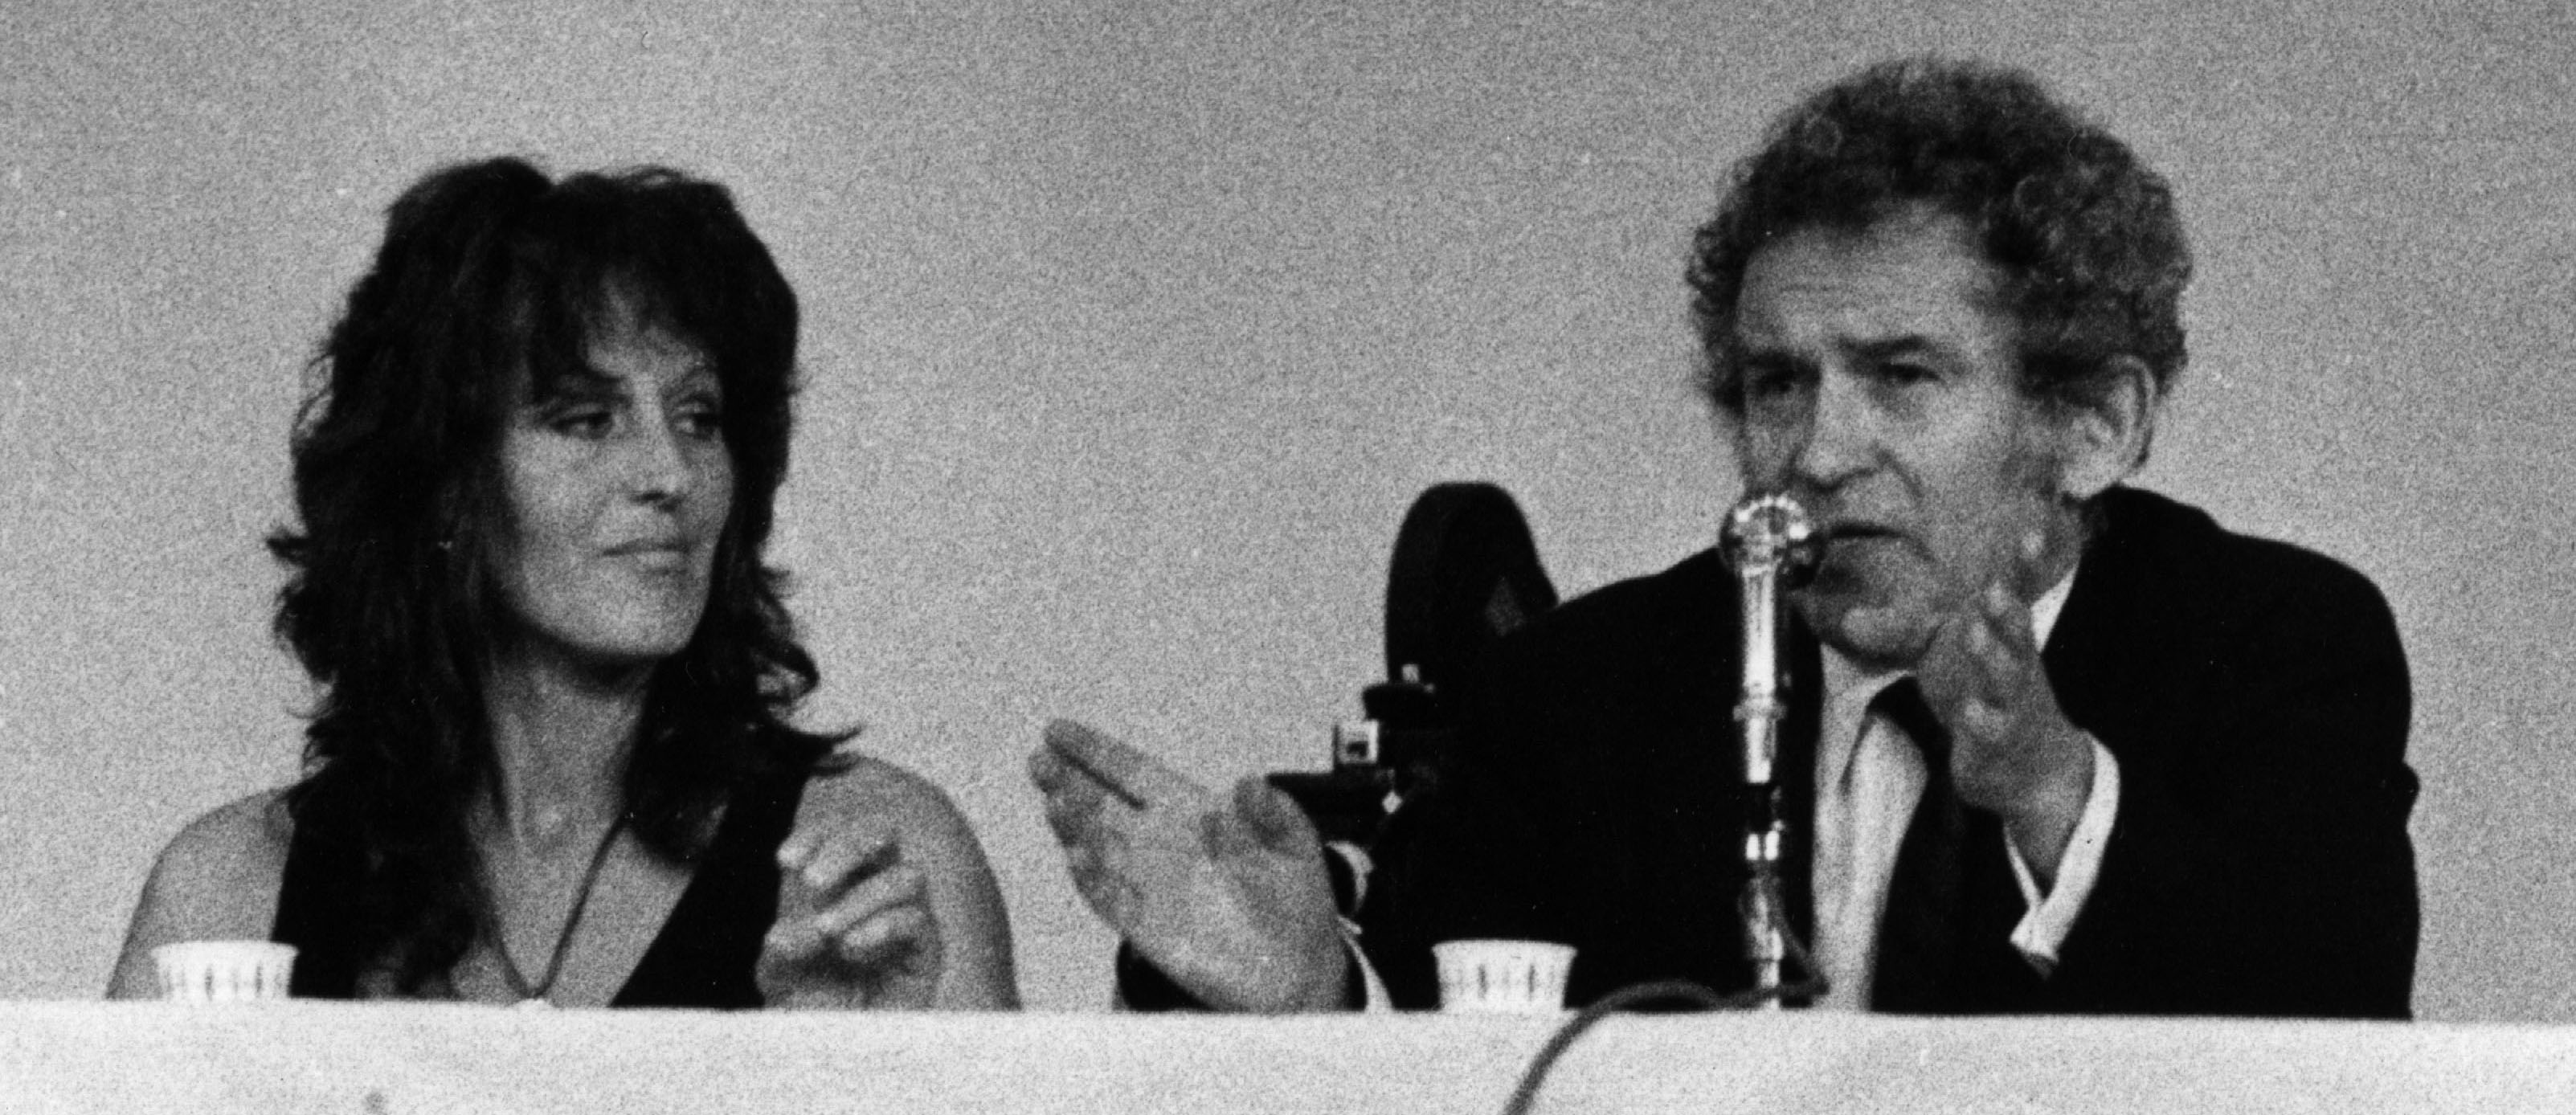 Norman Mailer versus Germaine Greer